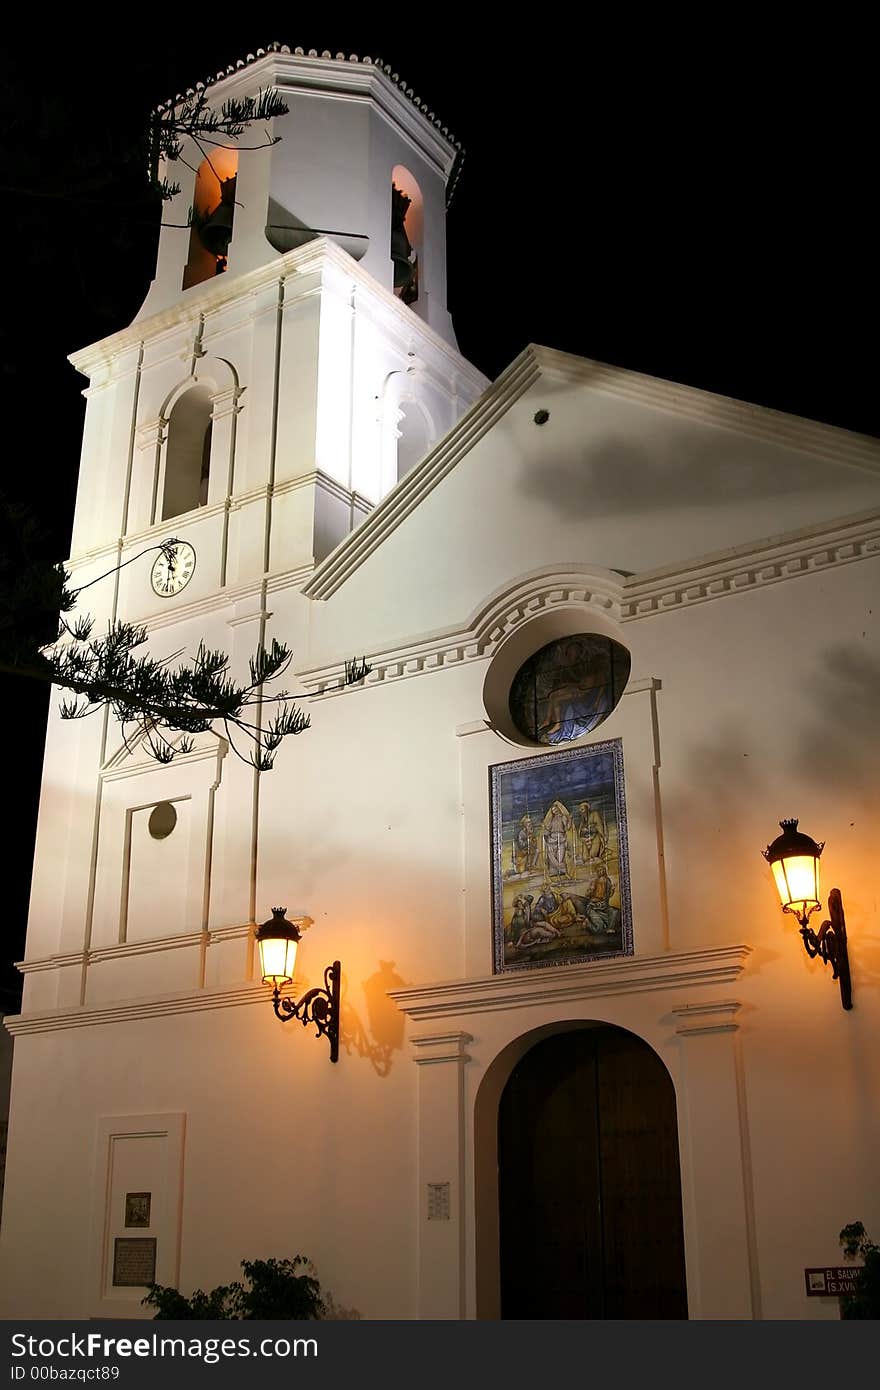 Little white church at night.